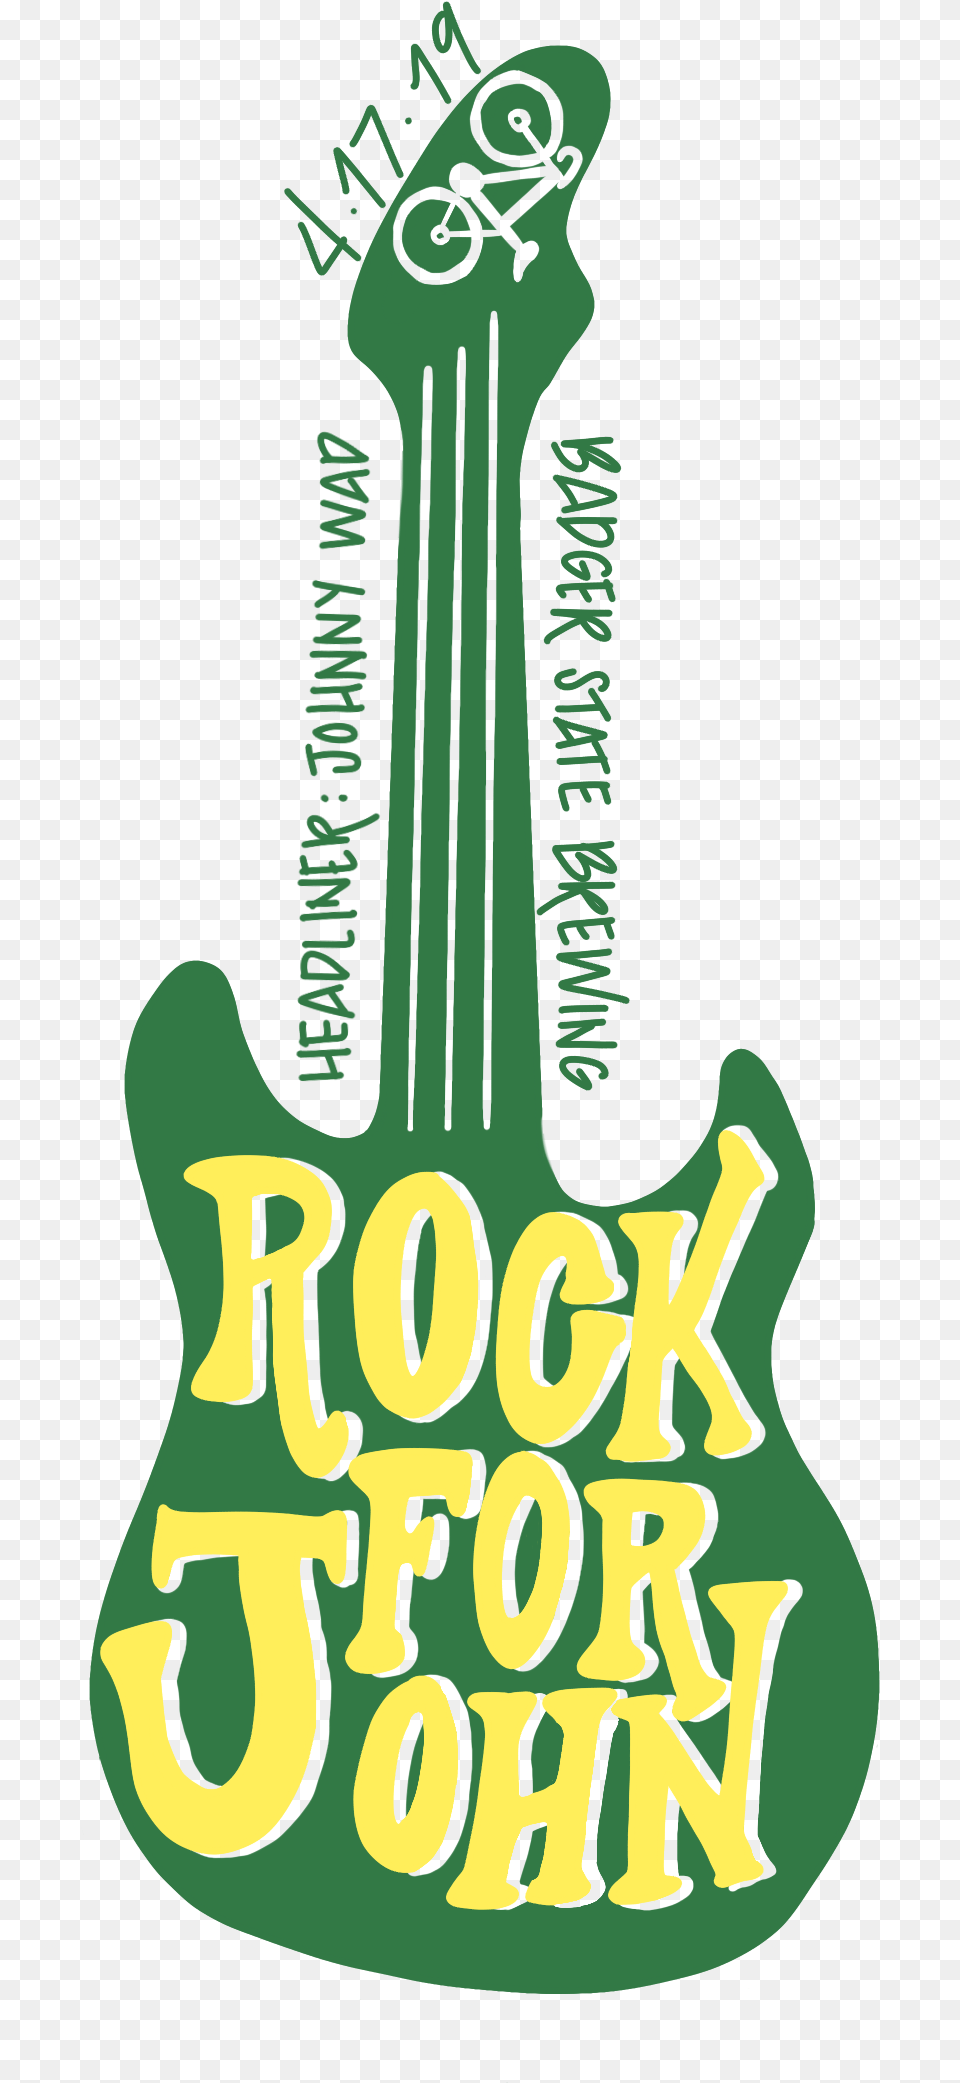 Corey Linsley Asks You To Rock For John Illustration, Guitar, Musical Instrument Free Png